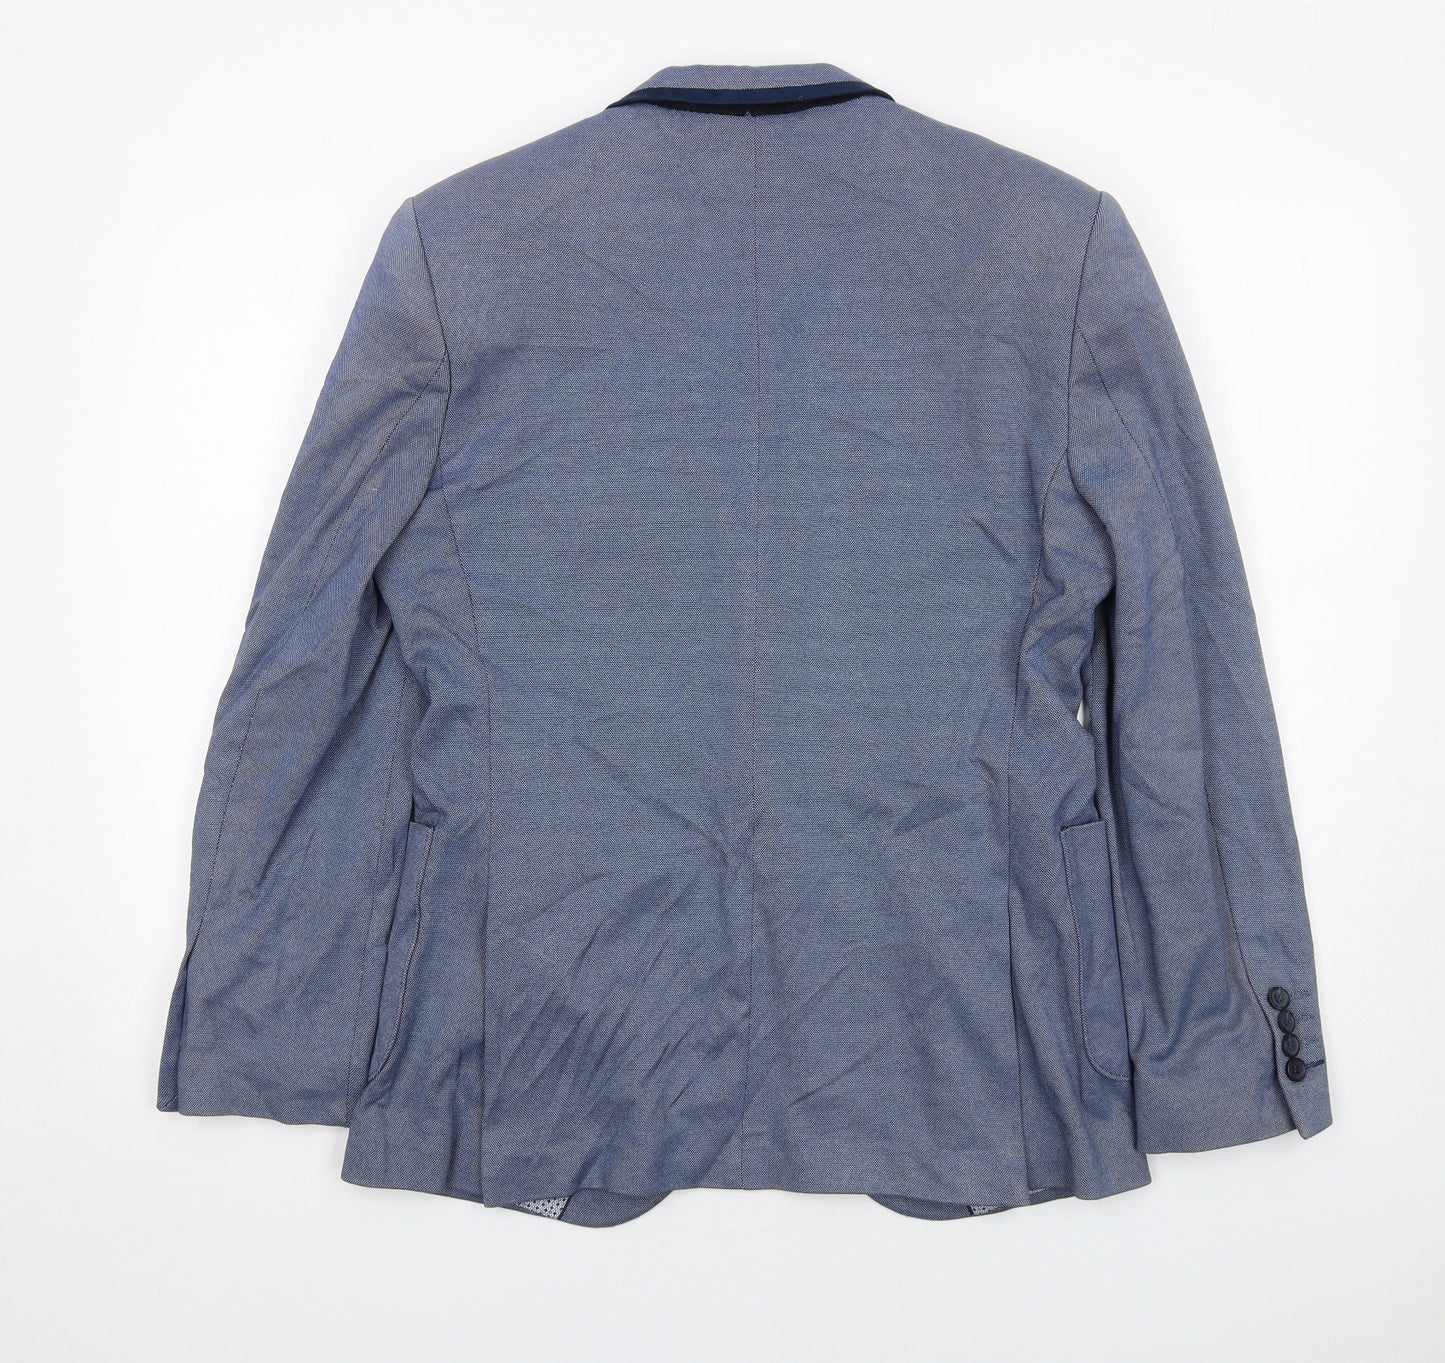 Steel & Jelly Mens Blue Cotton Jacket Suit Jacket Size 40 Regular